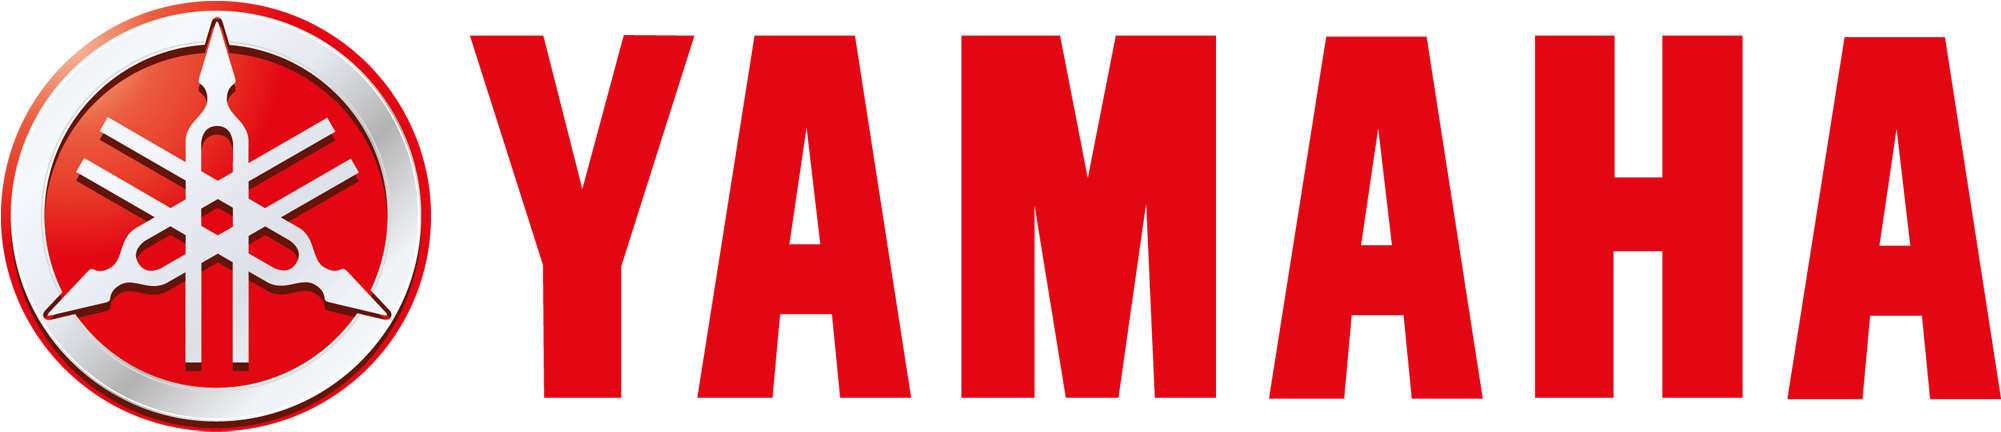 Yamaha Logo Redand White